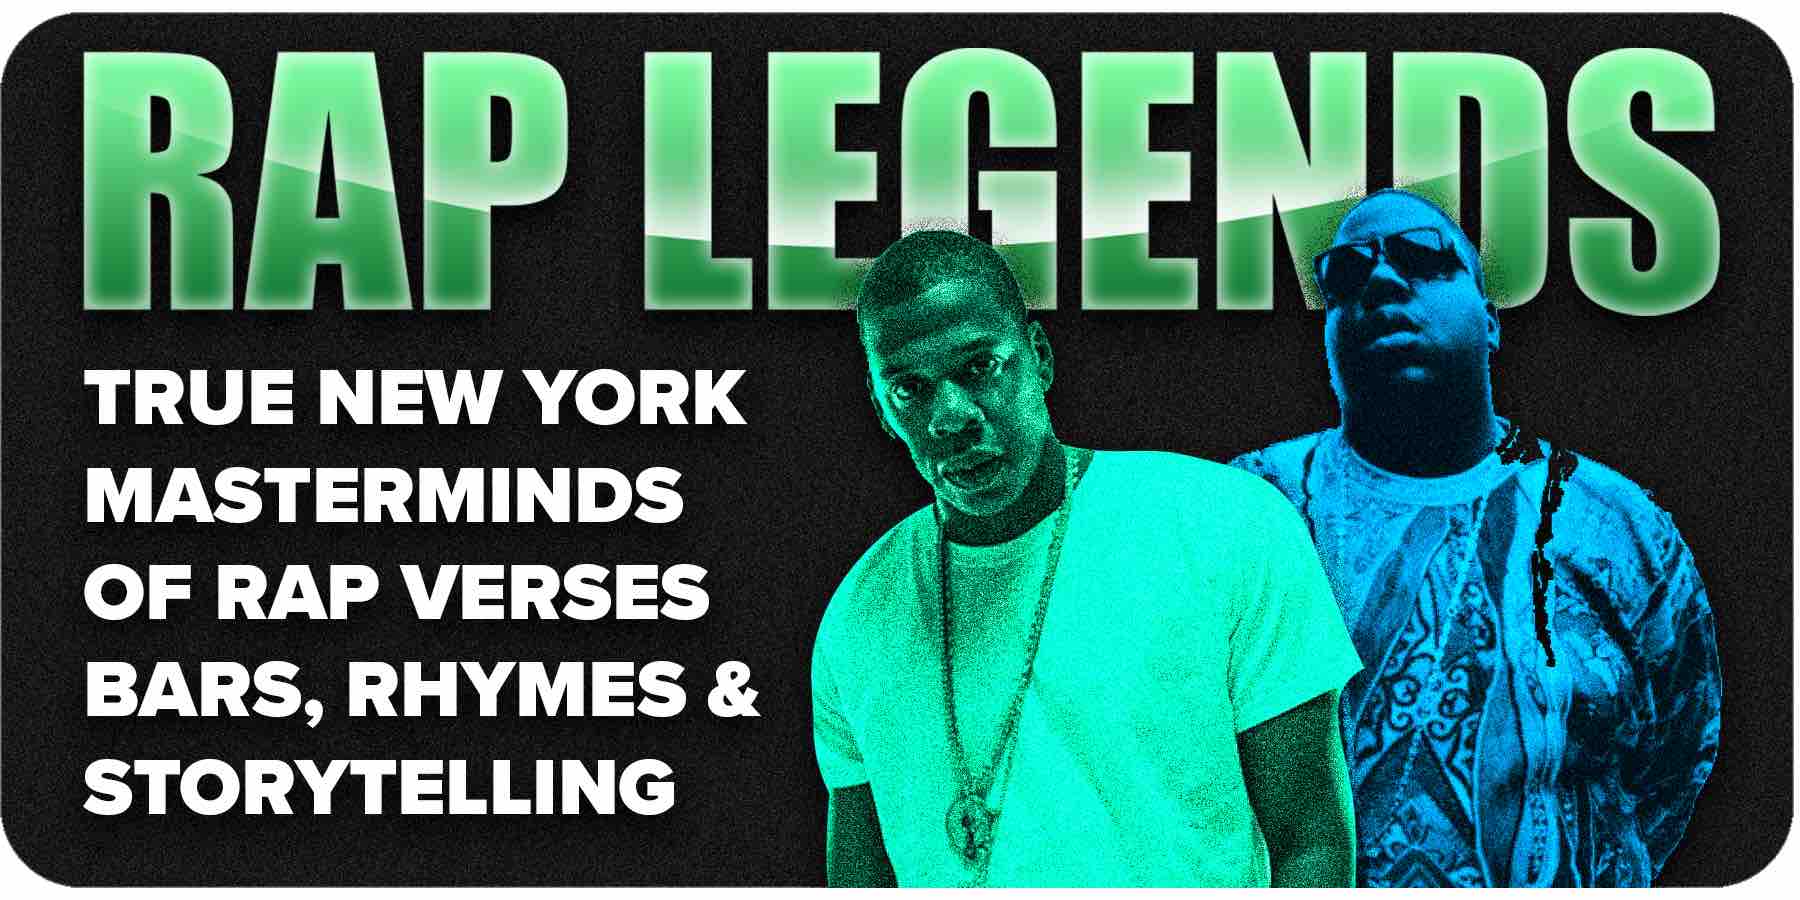 Rap legends JayZ and Biggie